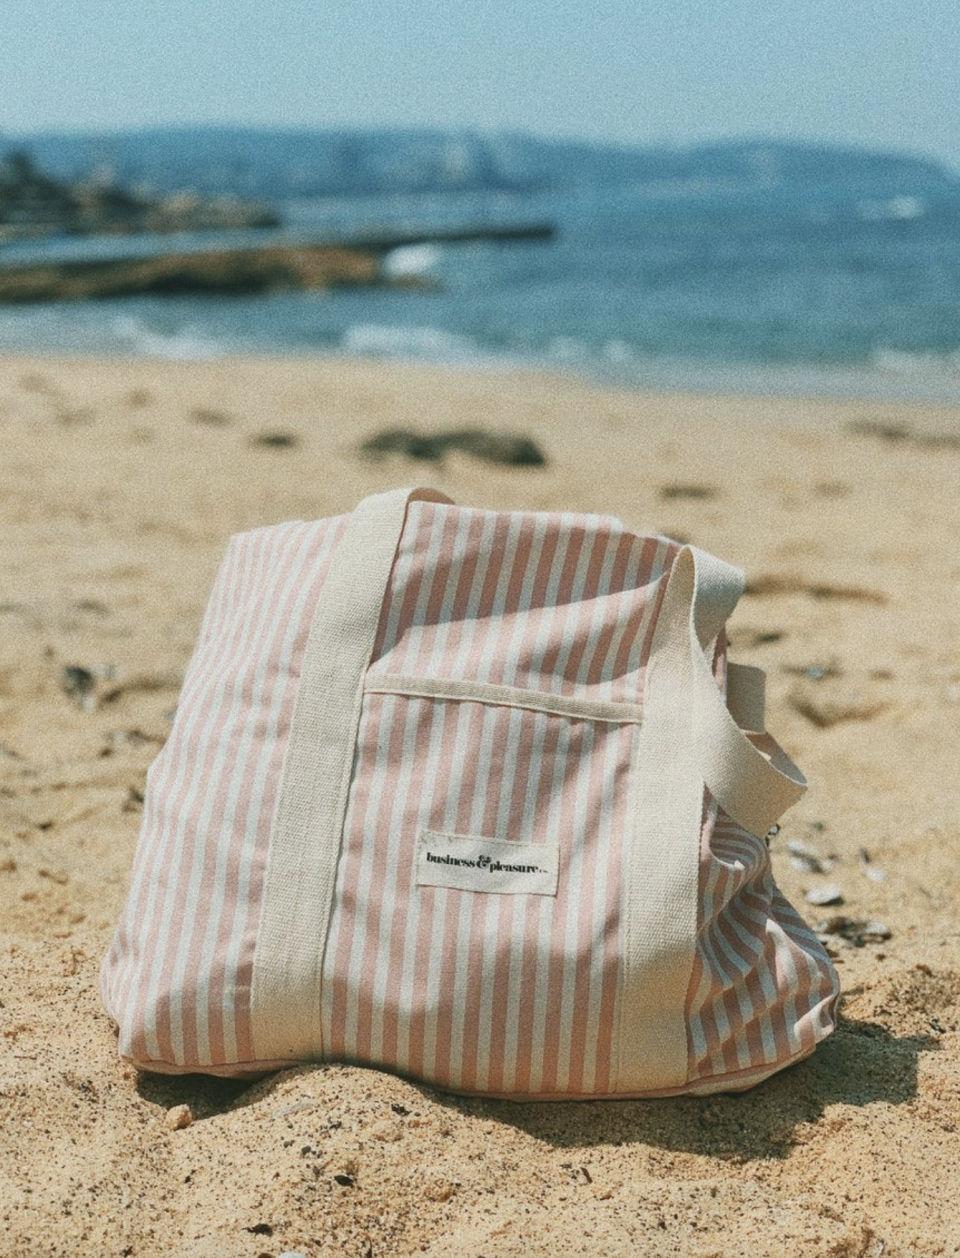 6) The Beach Bag